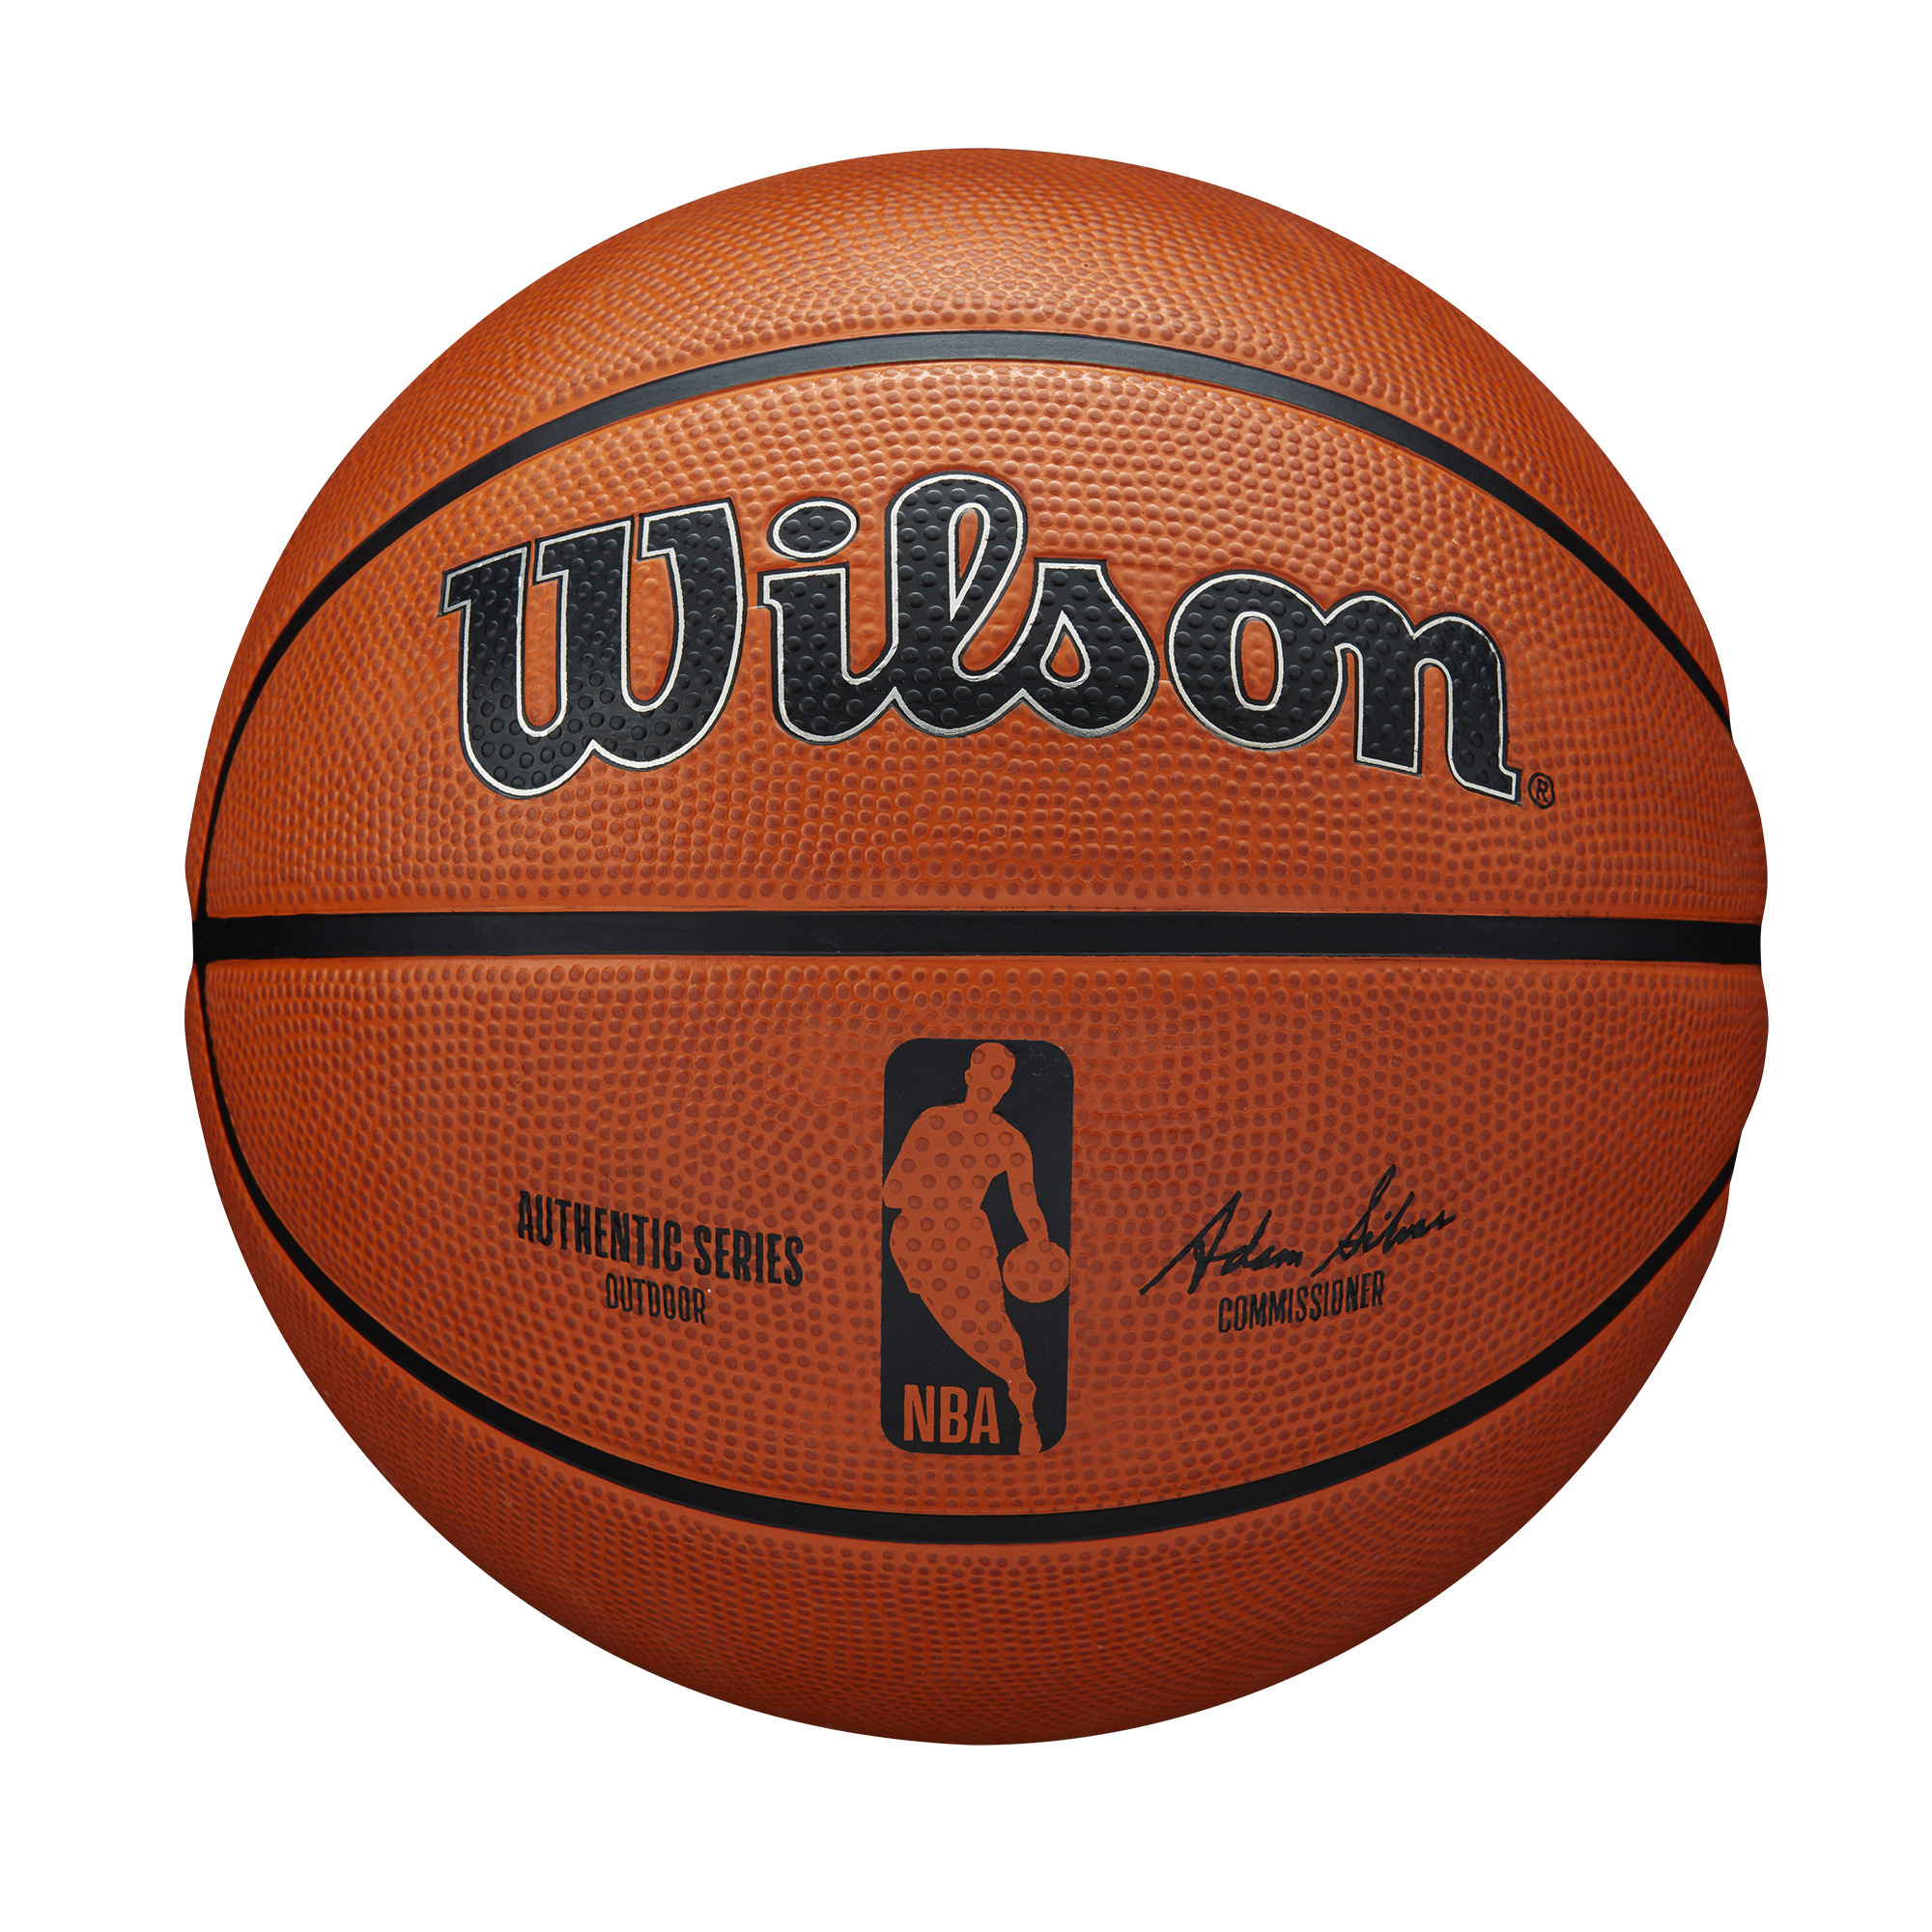 WILSON basketbola bumba NBA Authentic series  WTB7300XB06 bumba